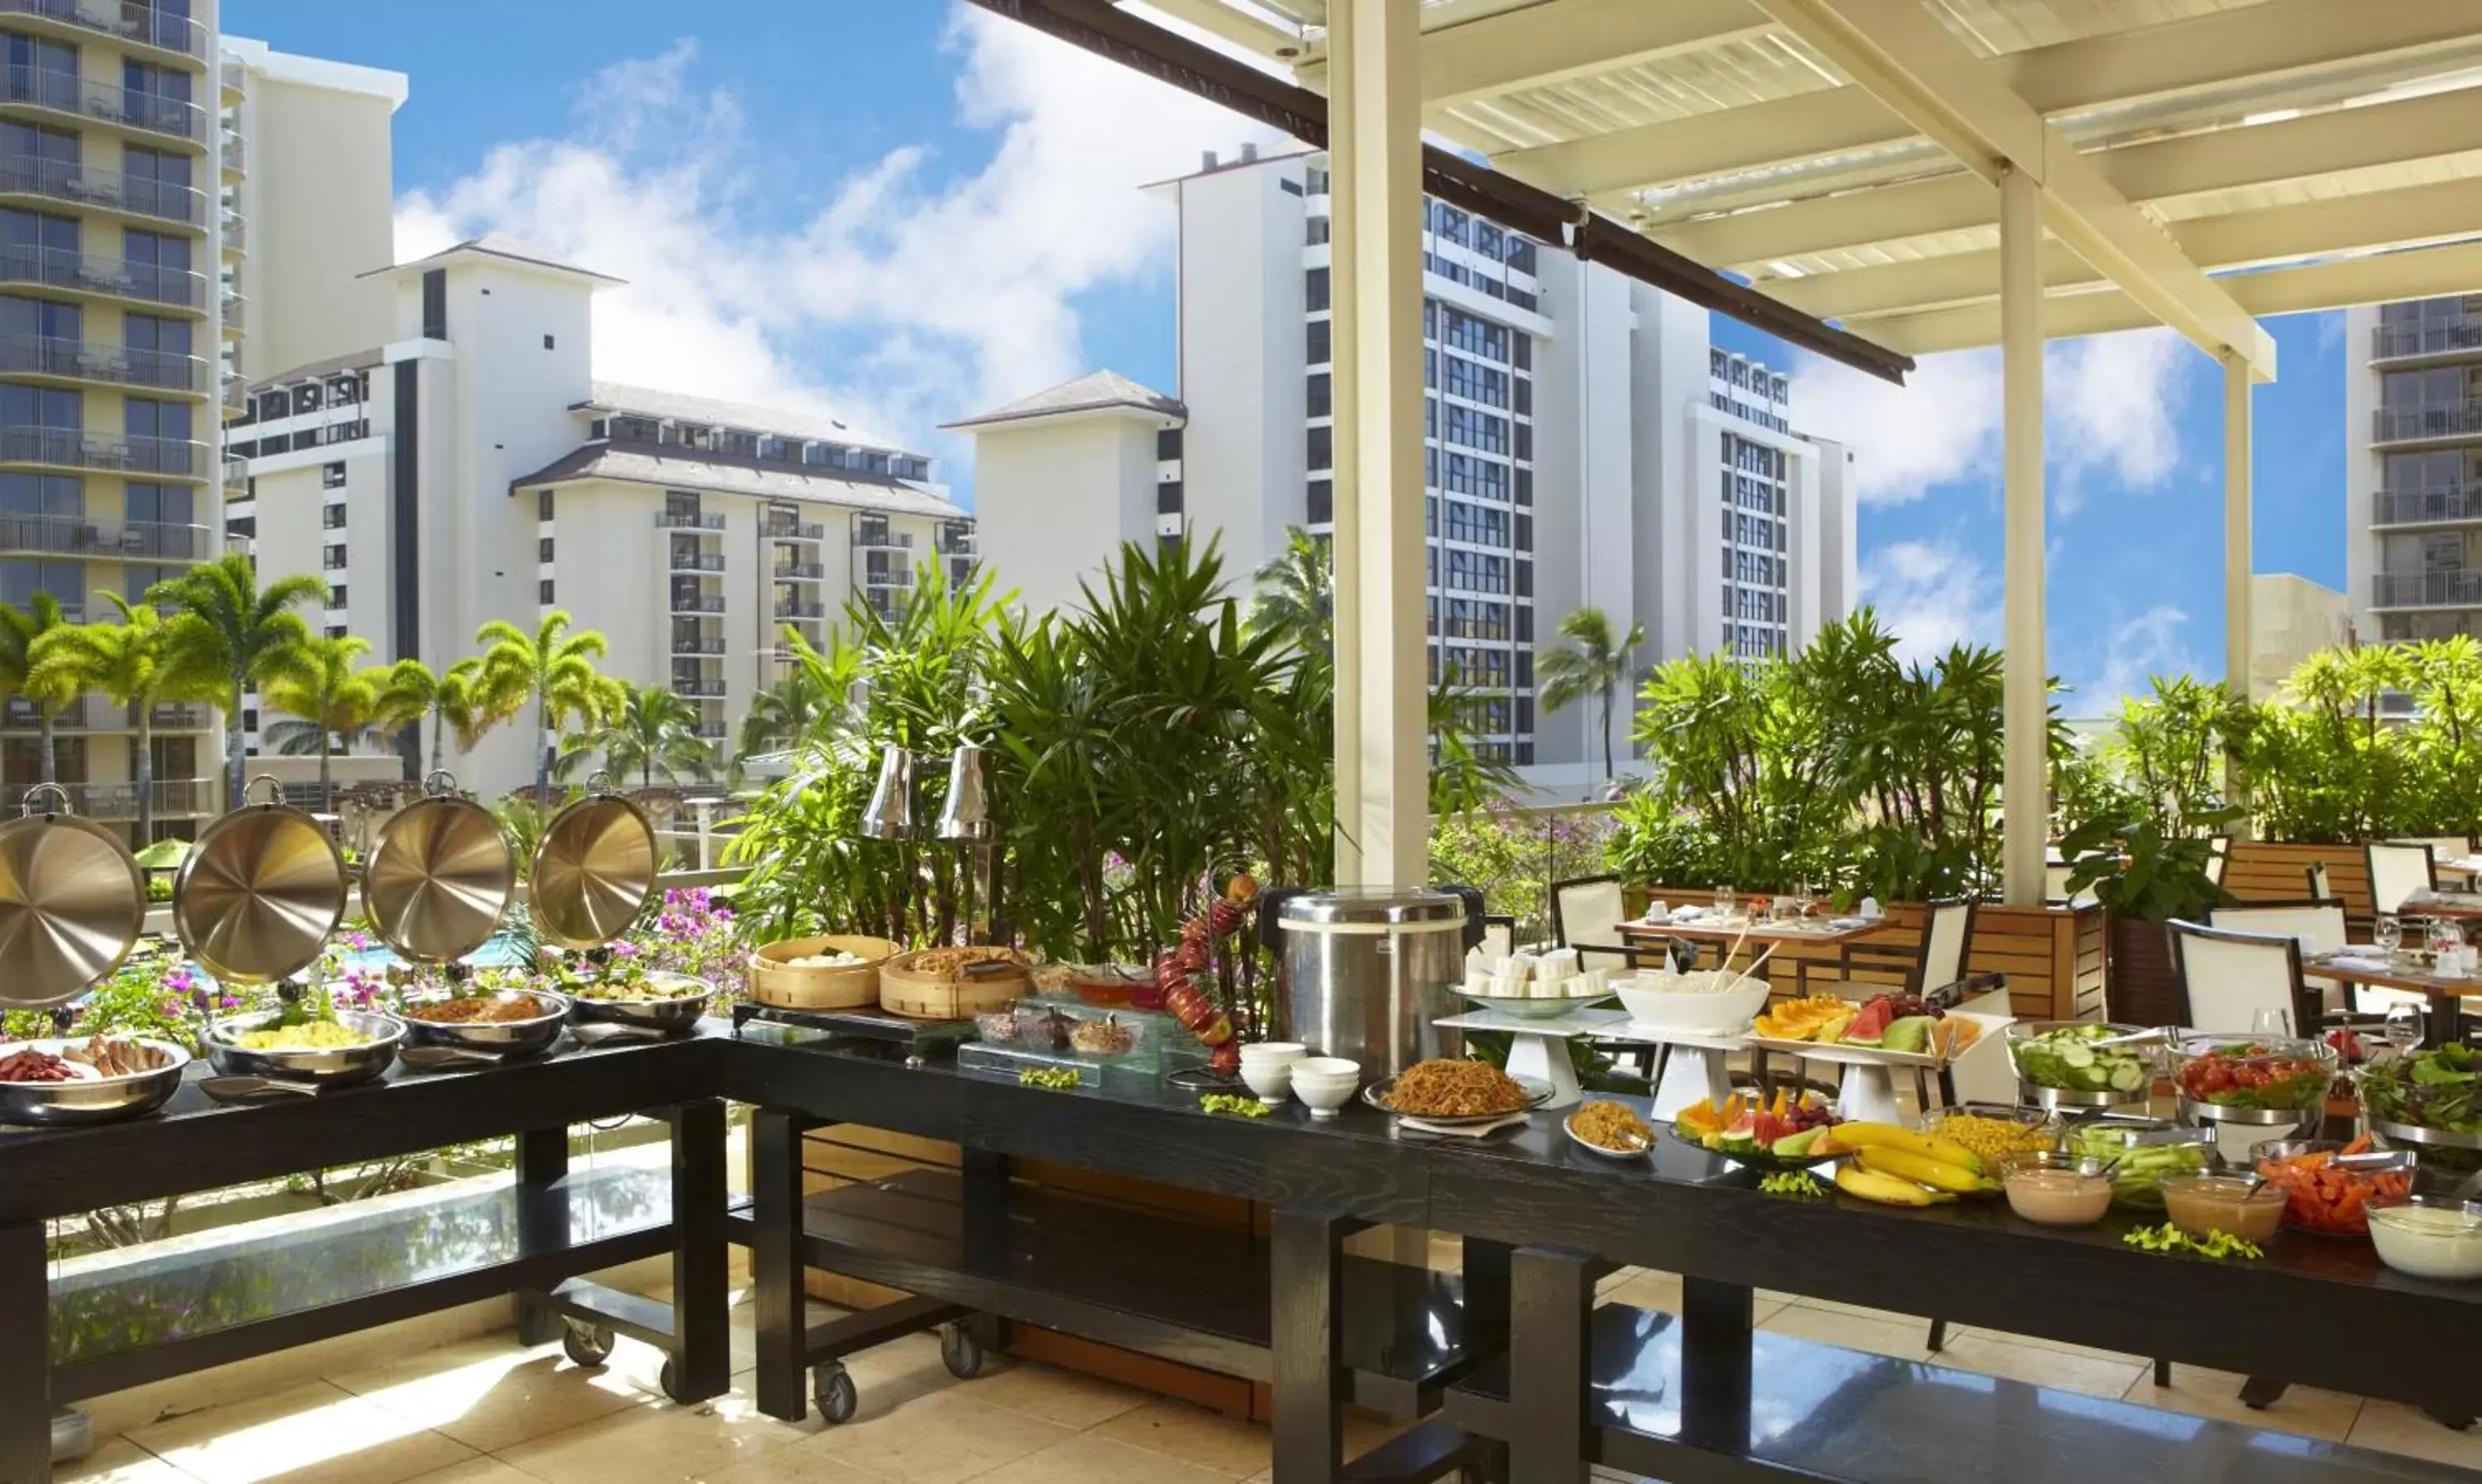 Restaurant/places to eat in Trump International Hotel Waikiki